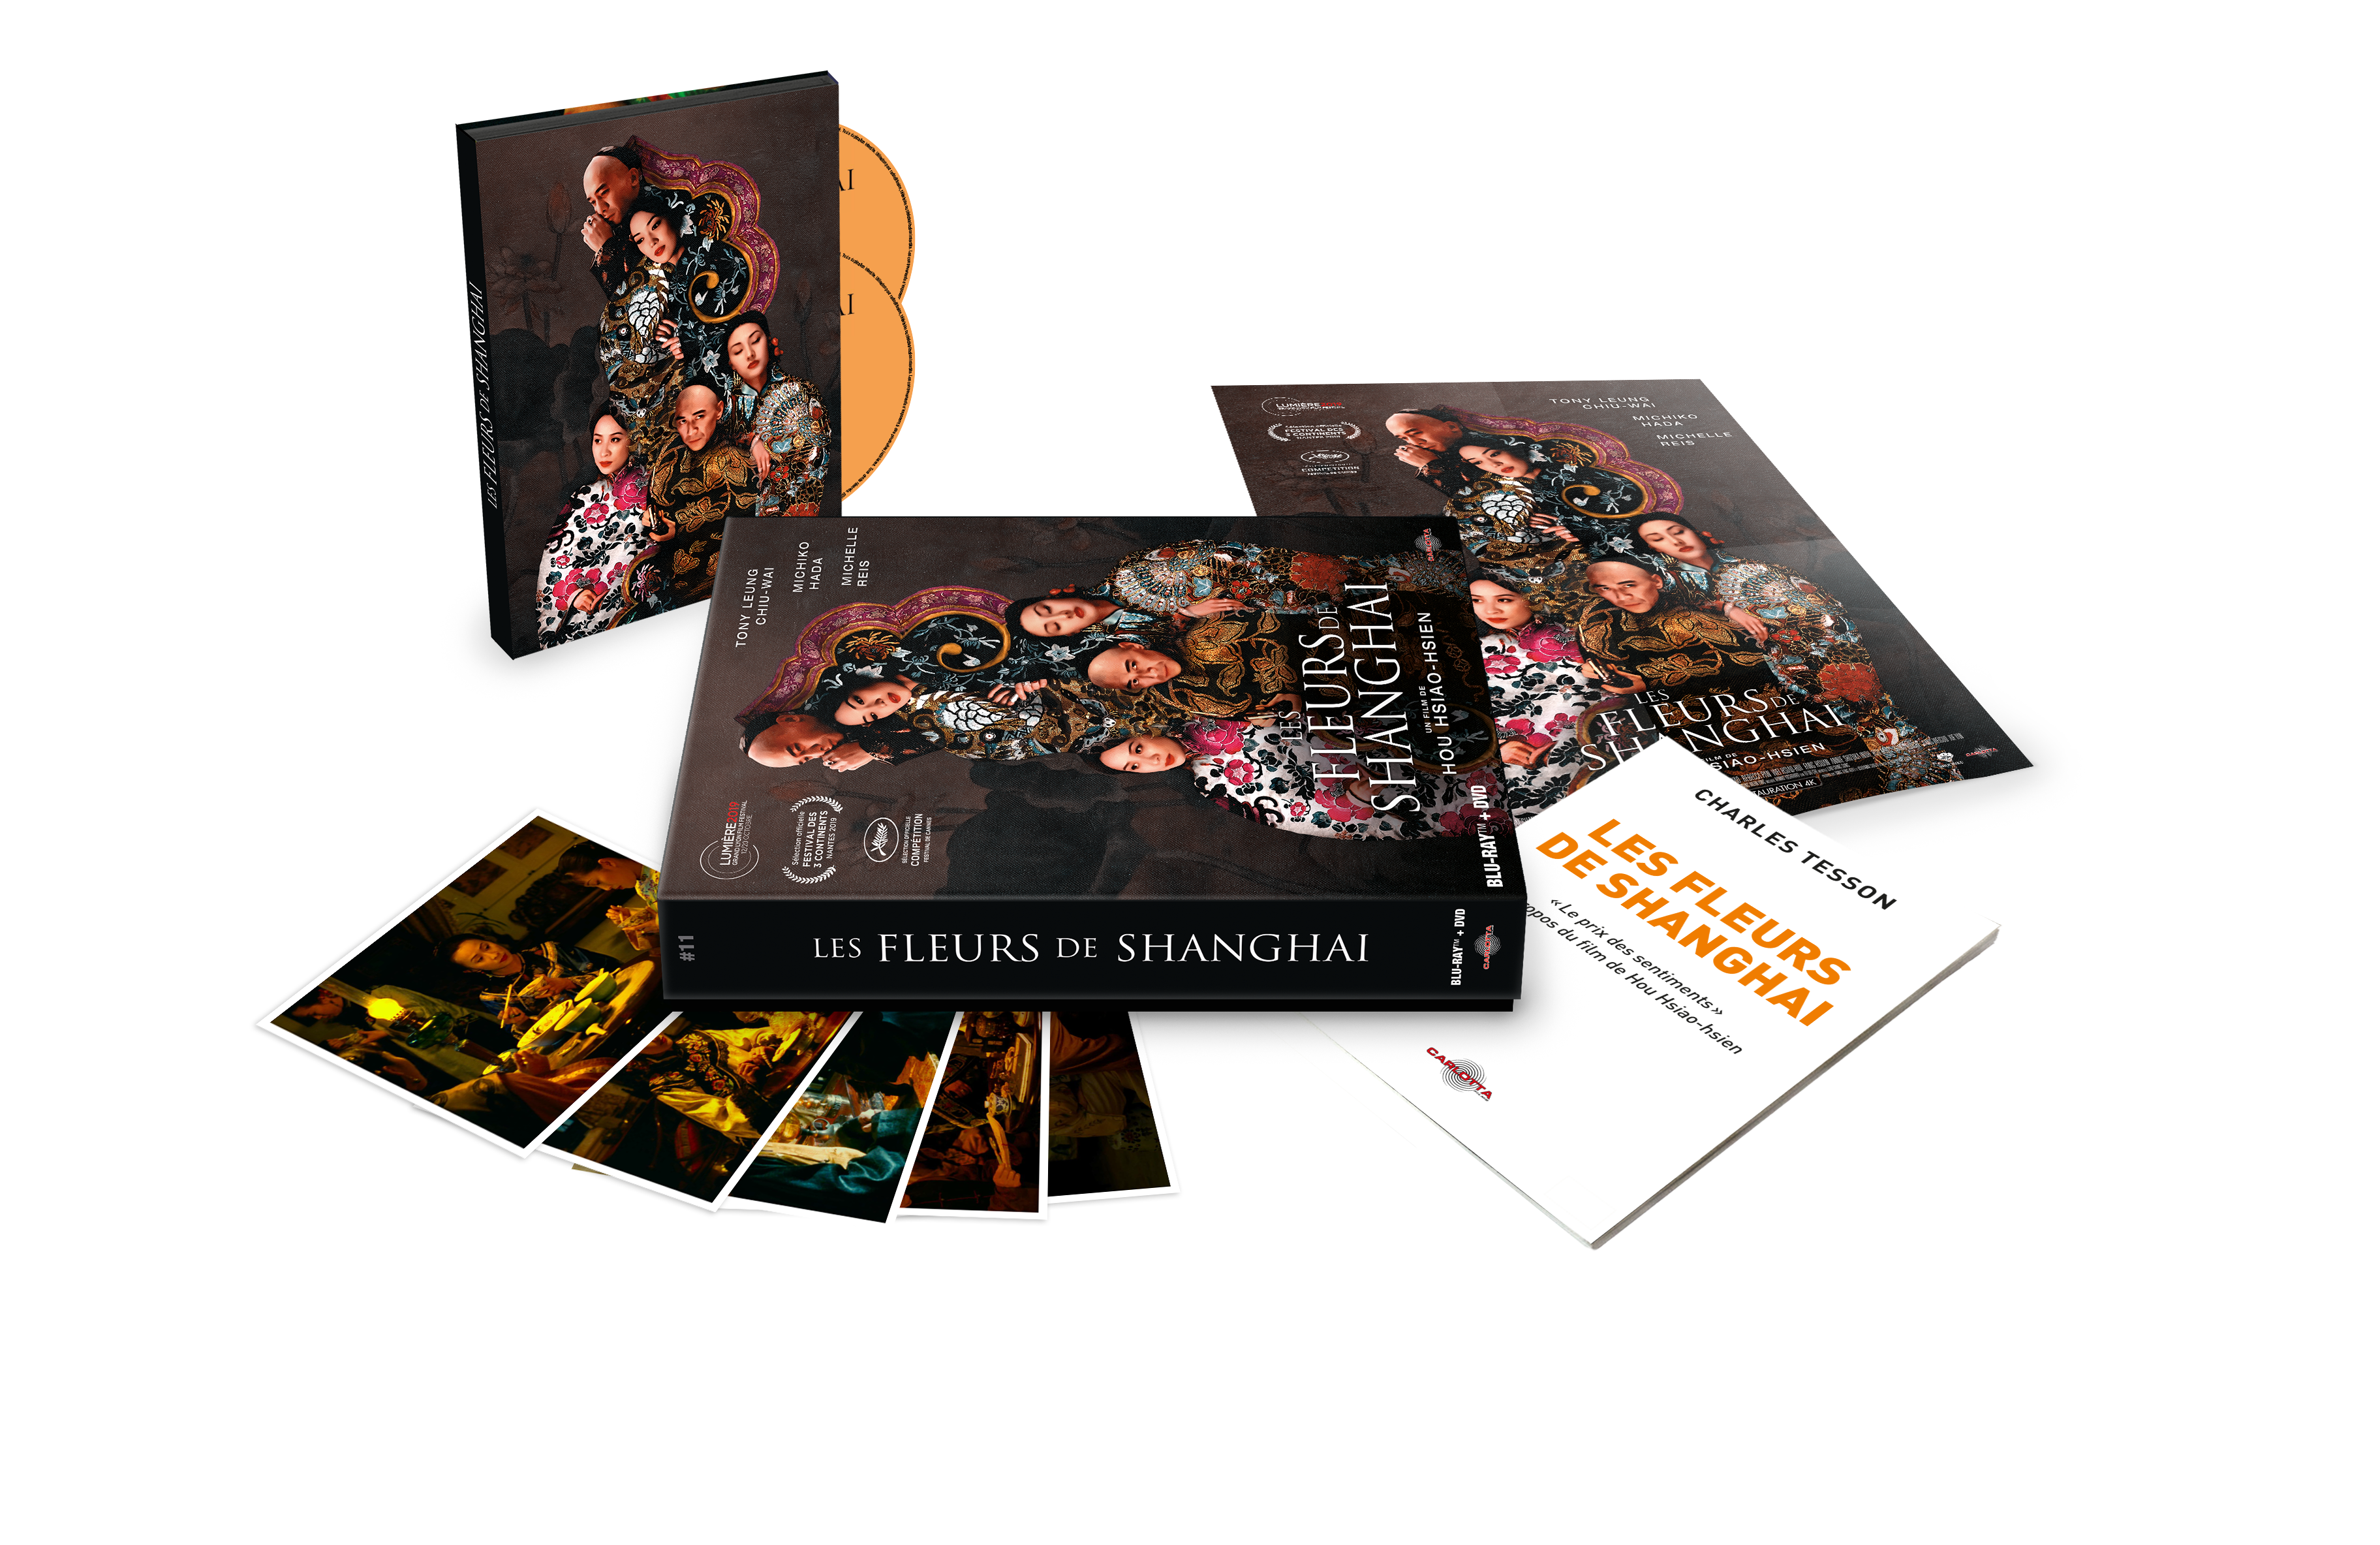 The Flowers of Shanghai - Prestige Limited Edition Combo Blu-ray/DVD + Memorabilia